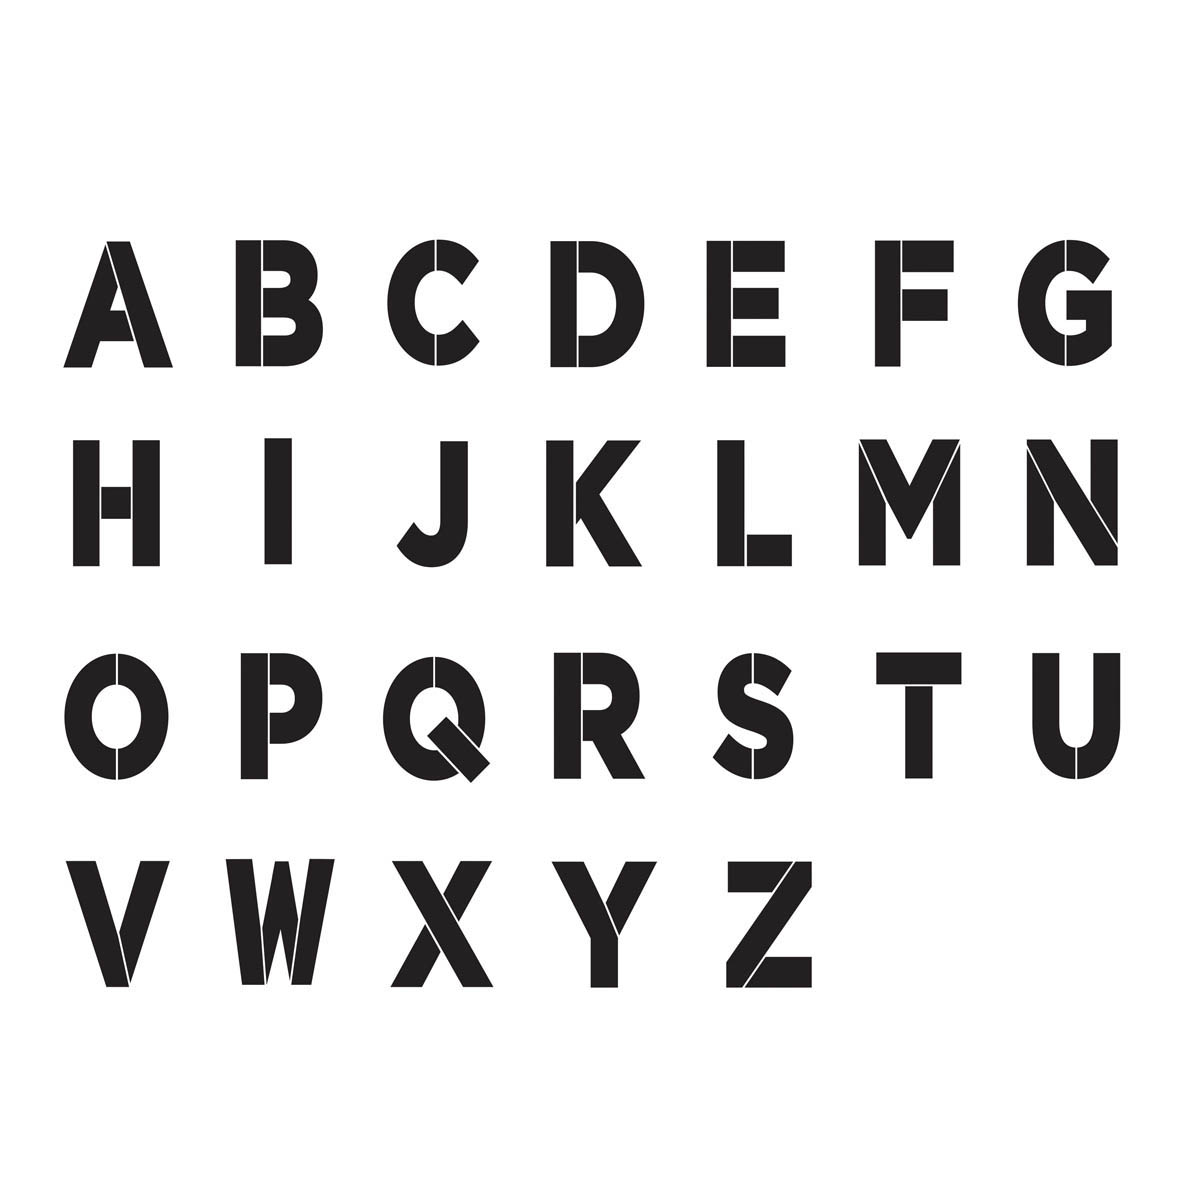 FolkArt ® Alphabet & Monogram Paper Stencils - Bold Font, 7